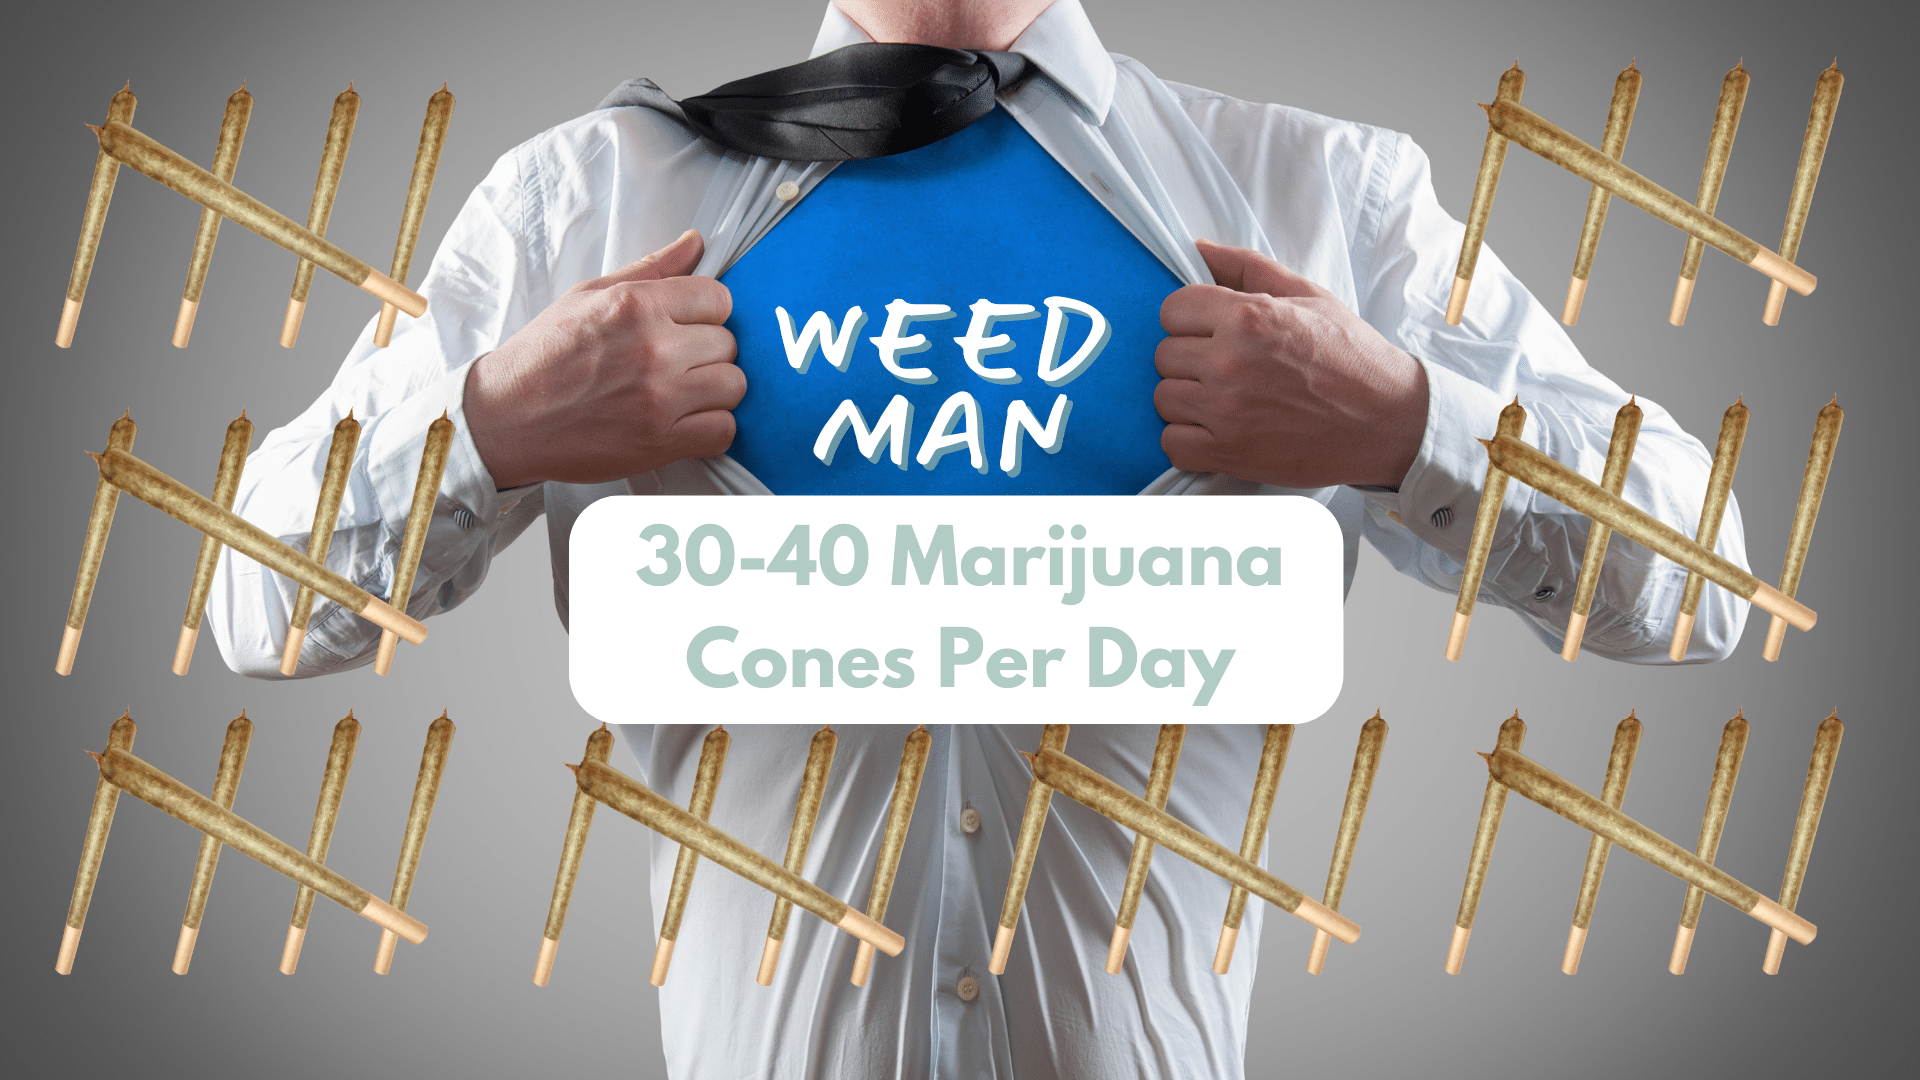 Super hero weed man smokes 30 40 cones per day by thcgummies. Com.